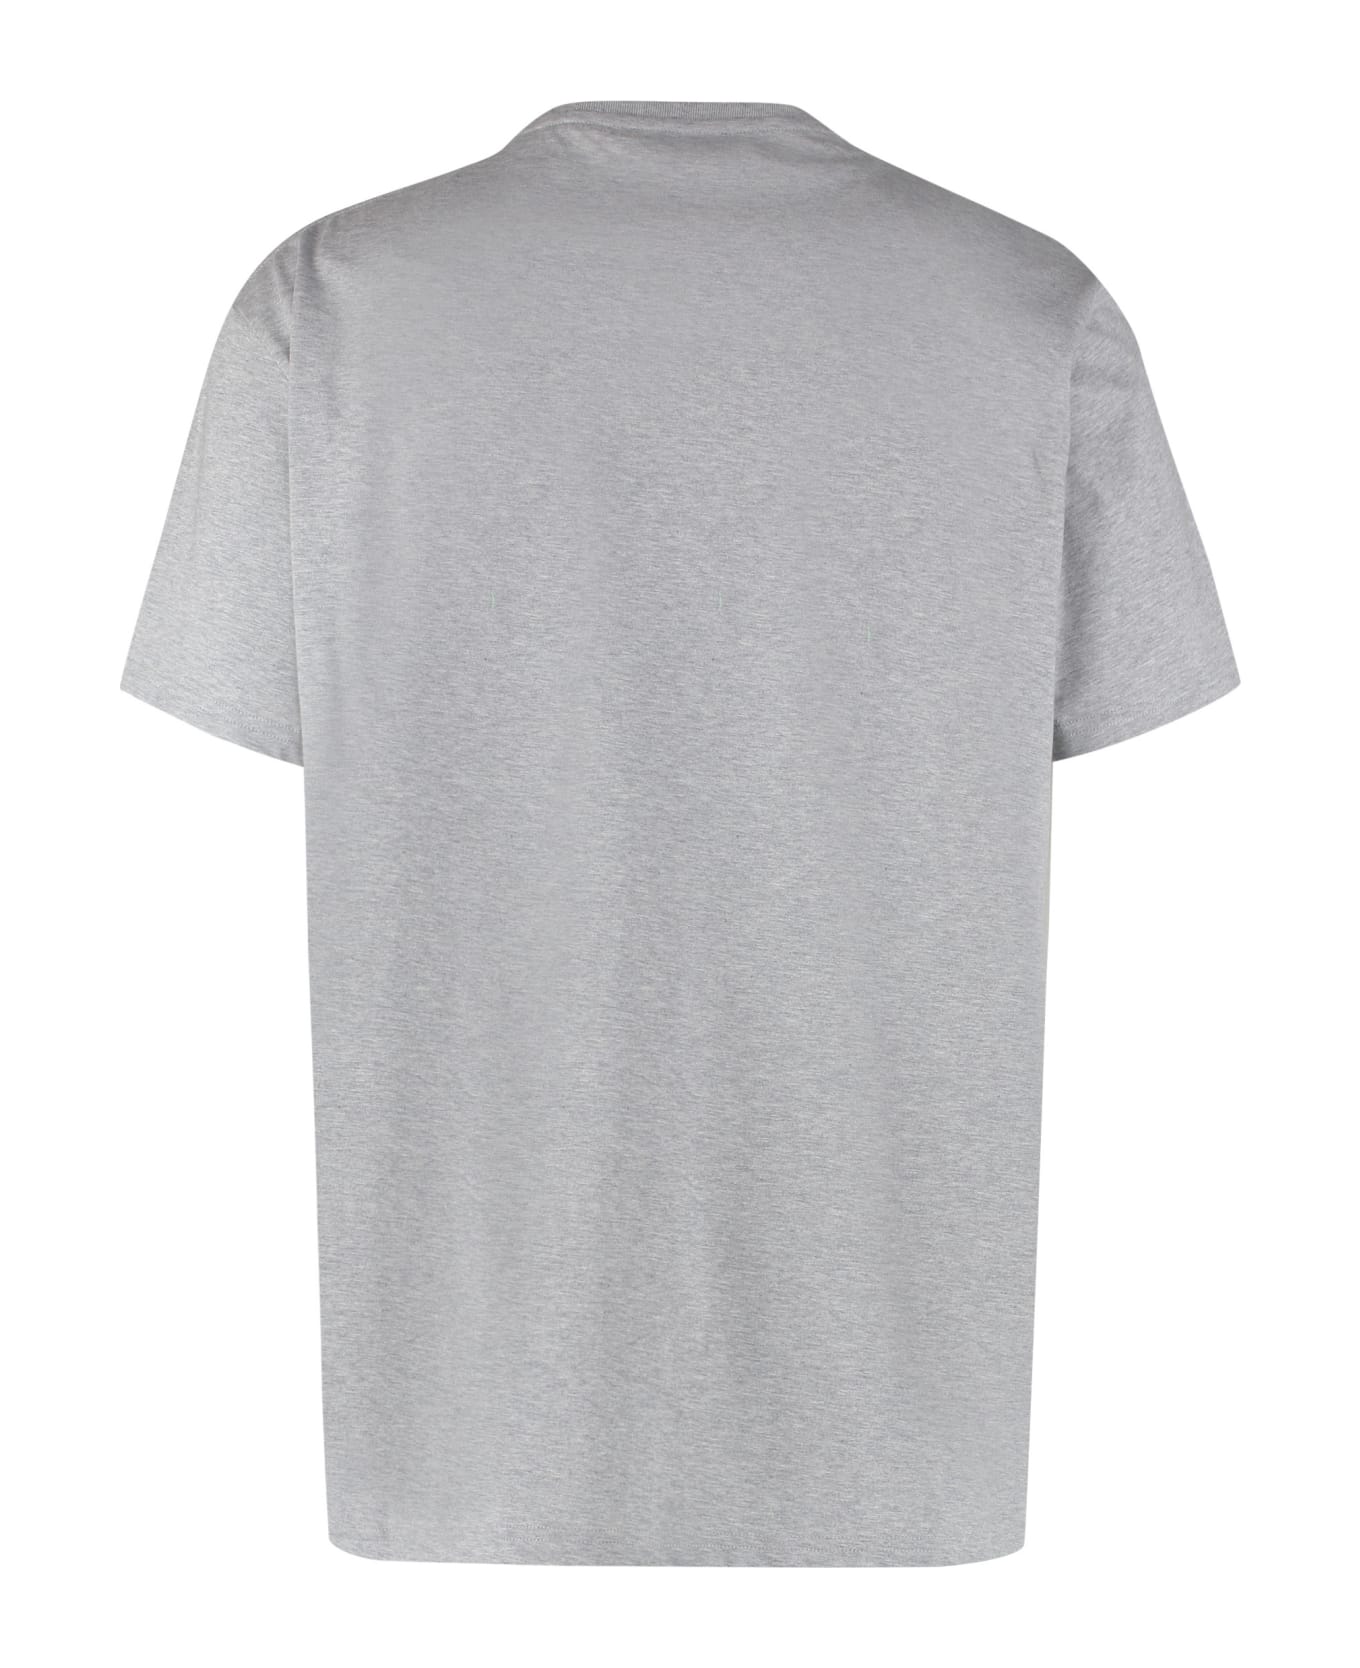 Alexander McQueen Printed Cotton T-shirt - Grigio